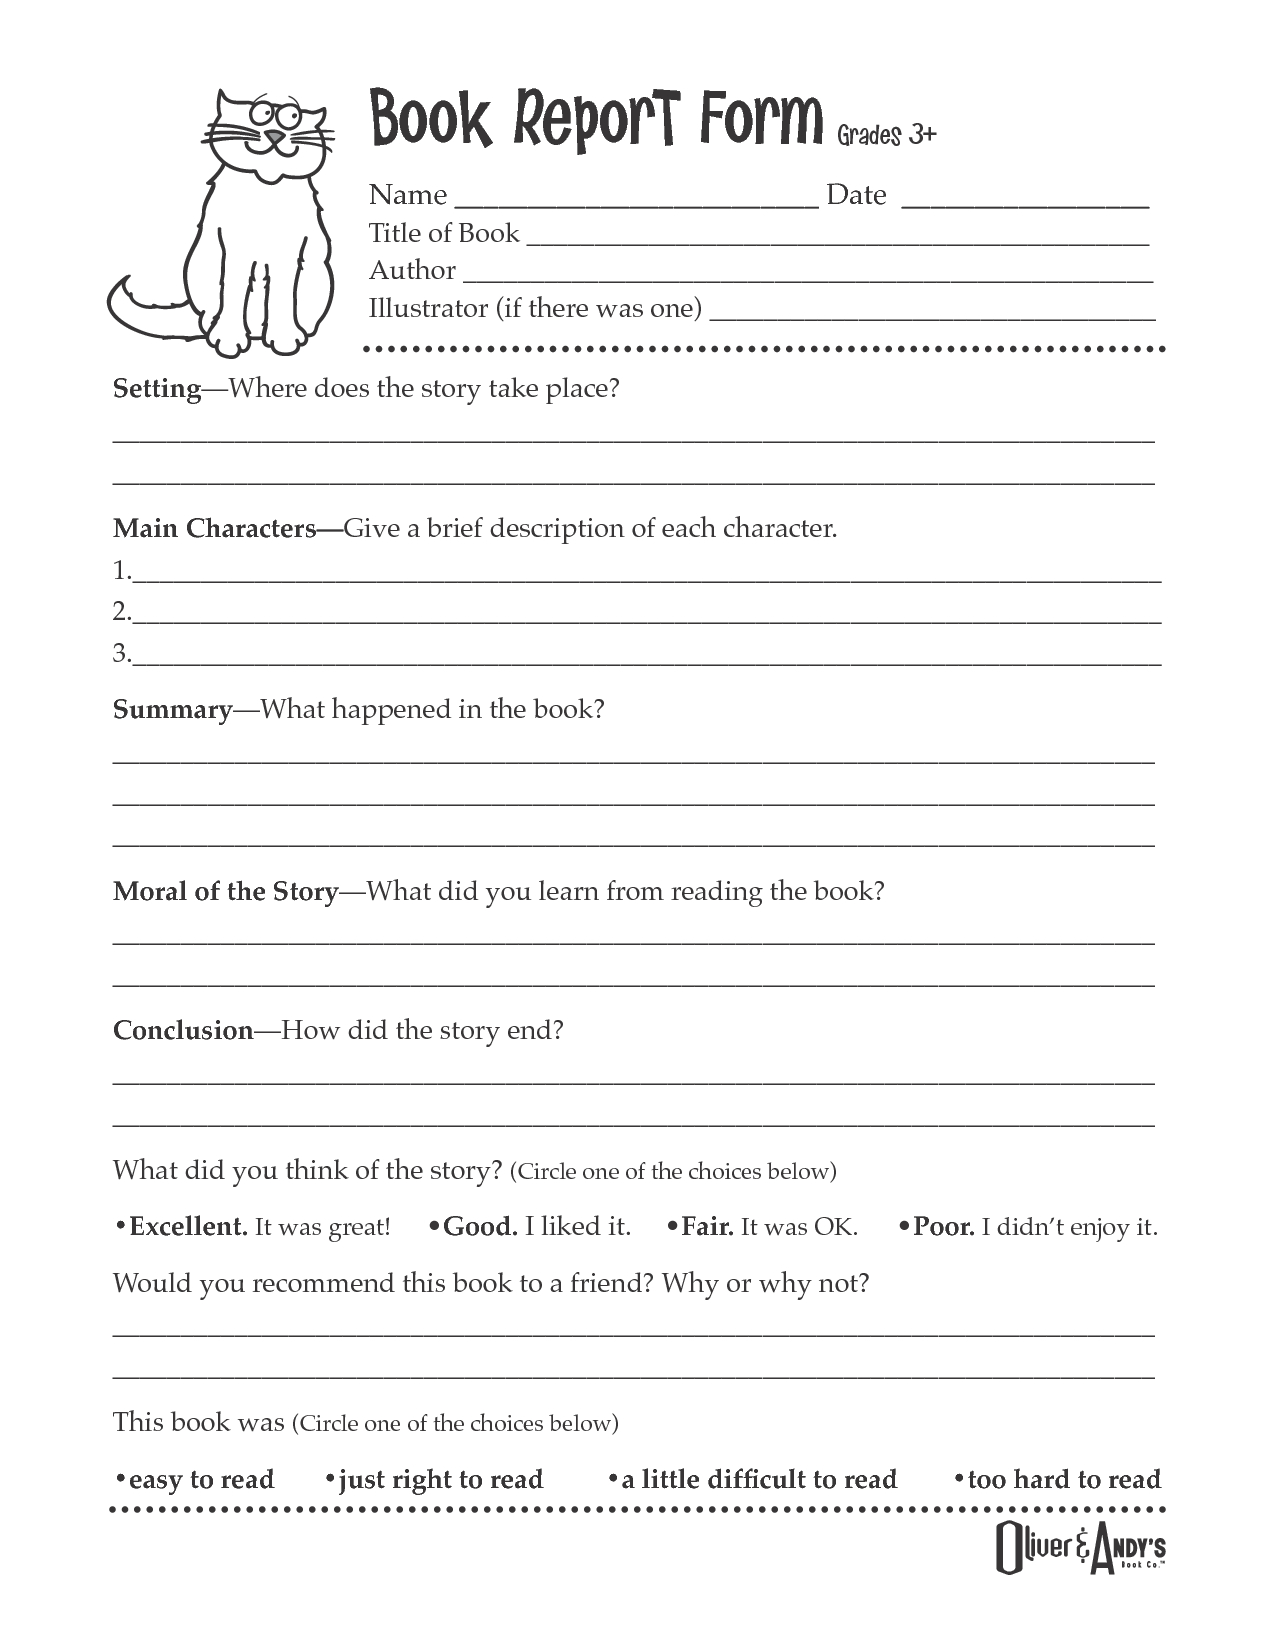 Second Grade Book Report Template | Book Report Form Grades In Book Report Template 2Nd Grade